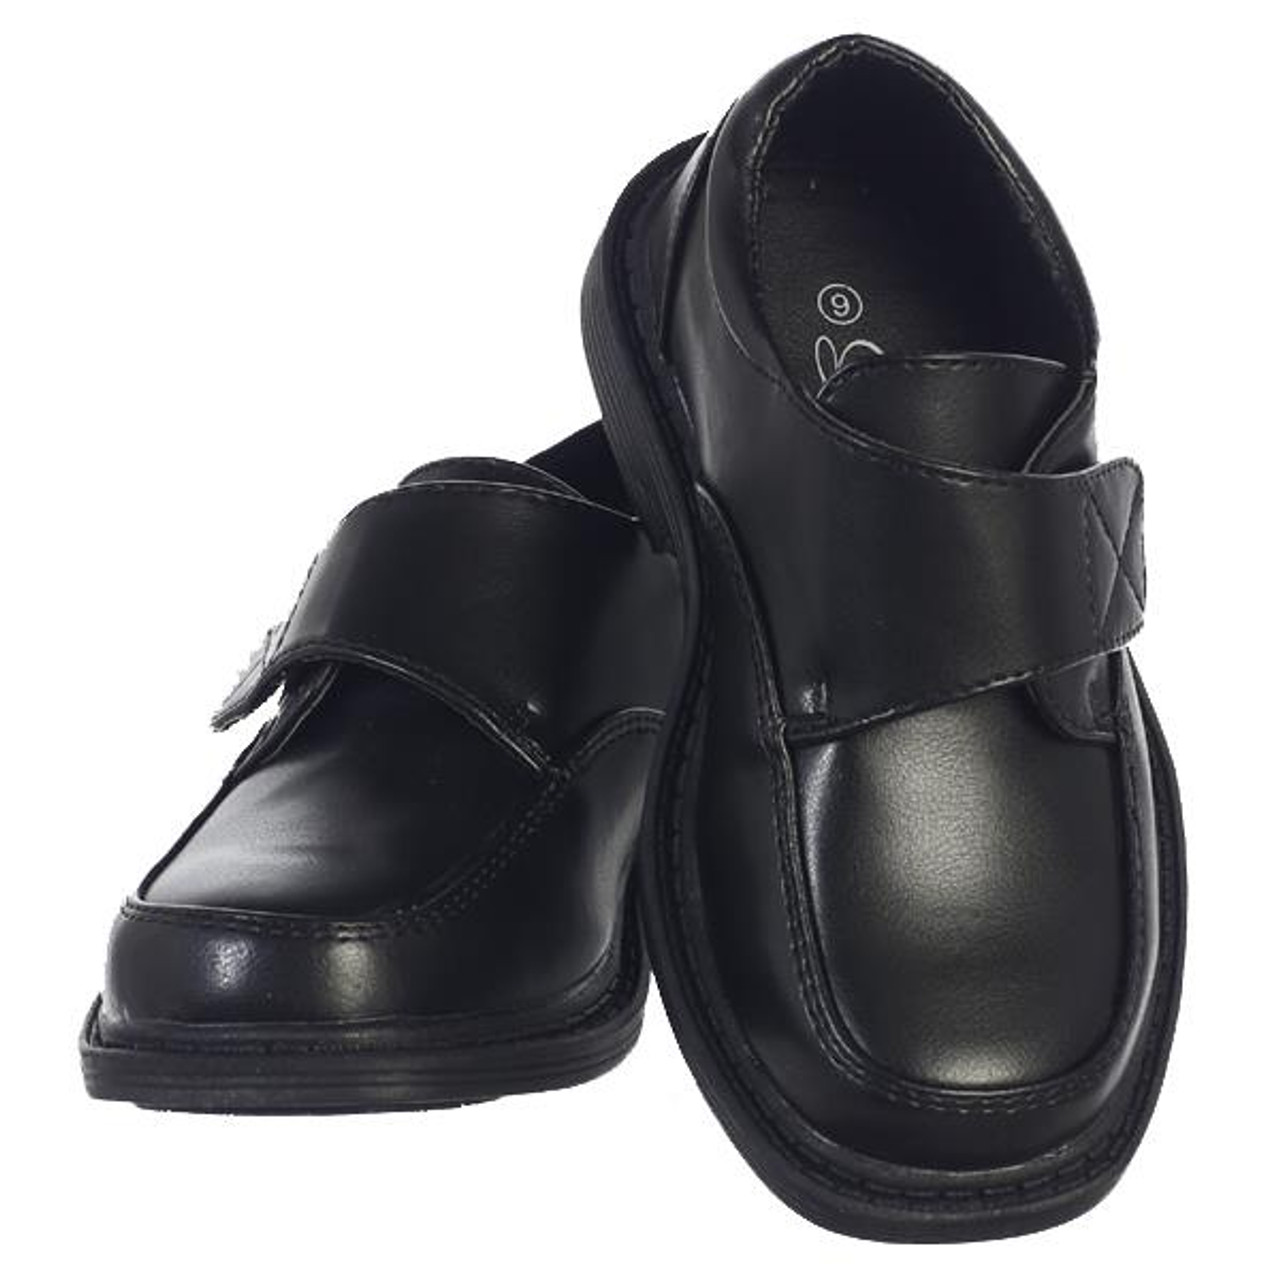 matte black dress shoes